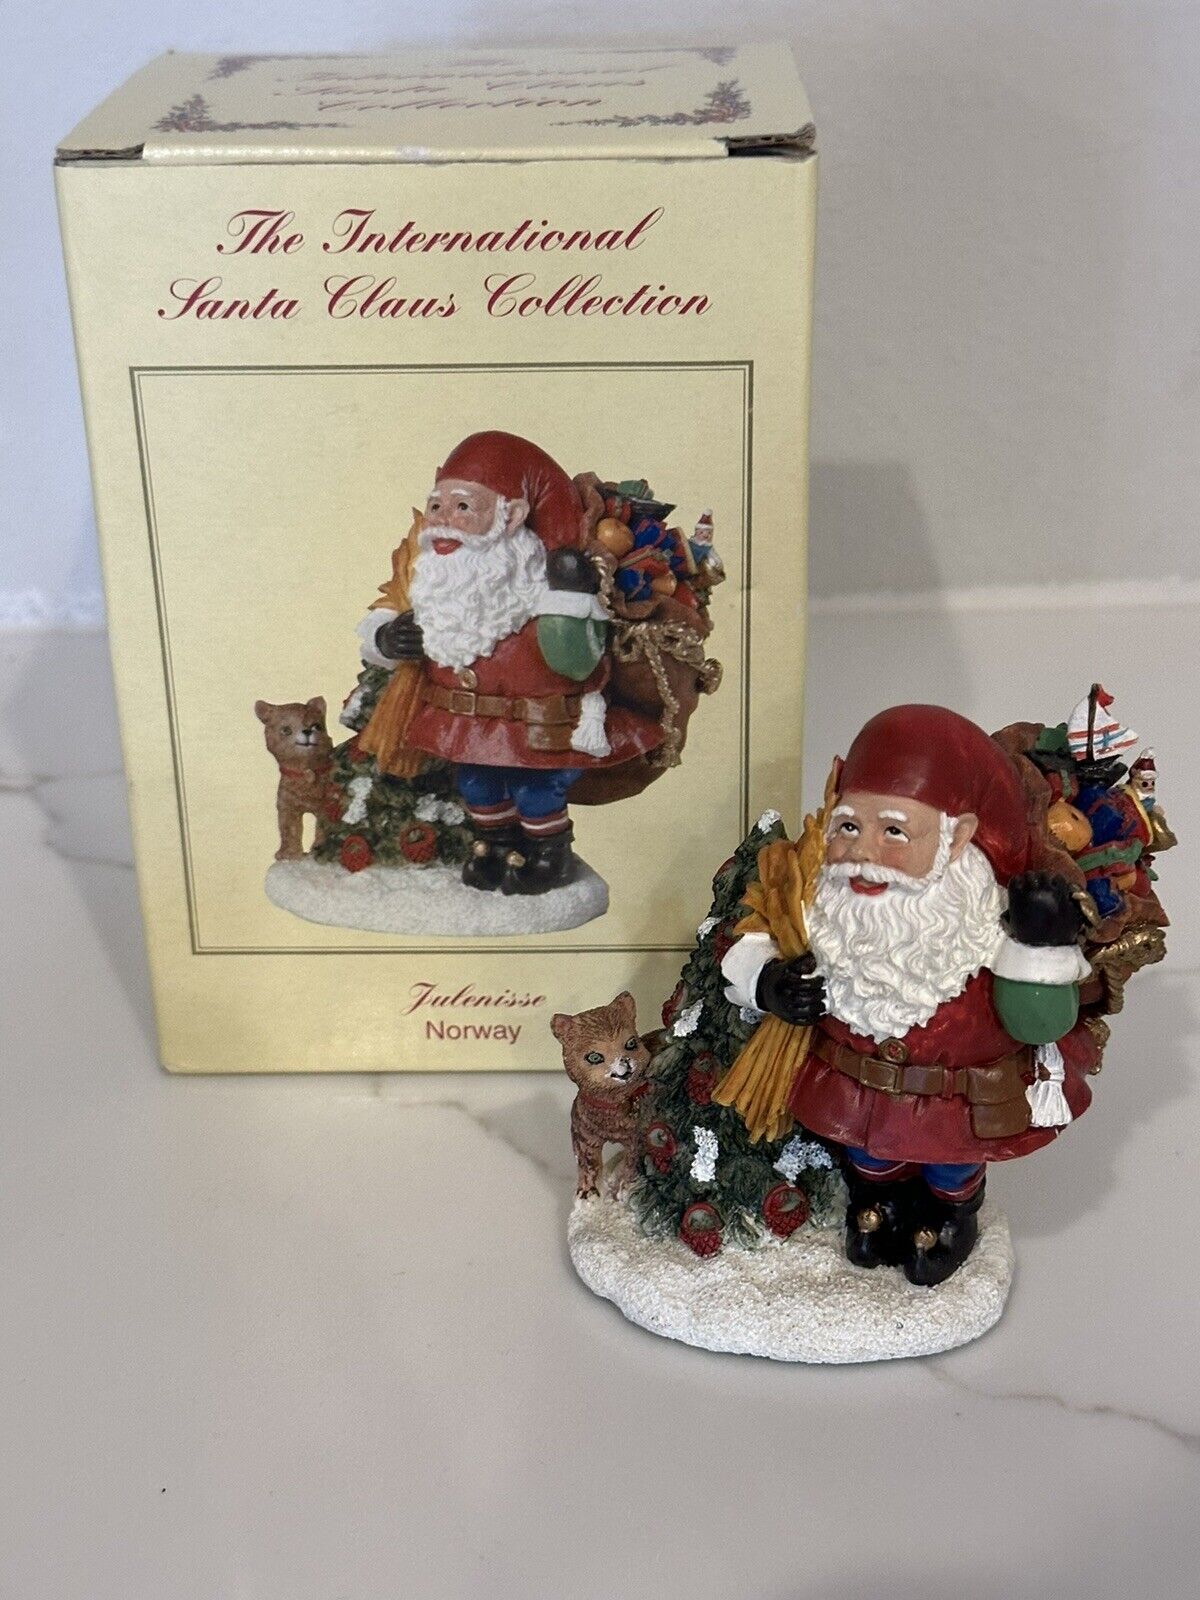 International Santa Claus Collection Norway “Julenisse”